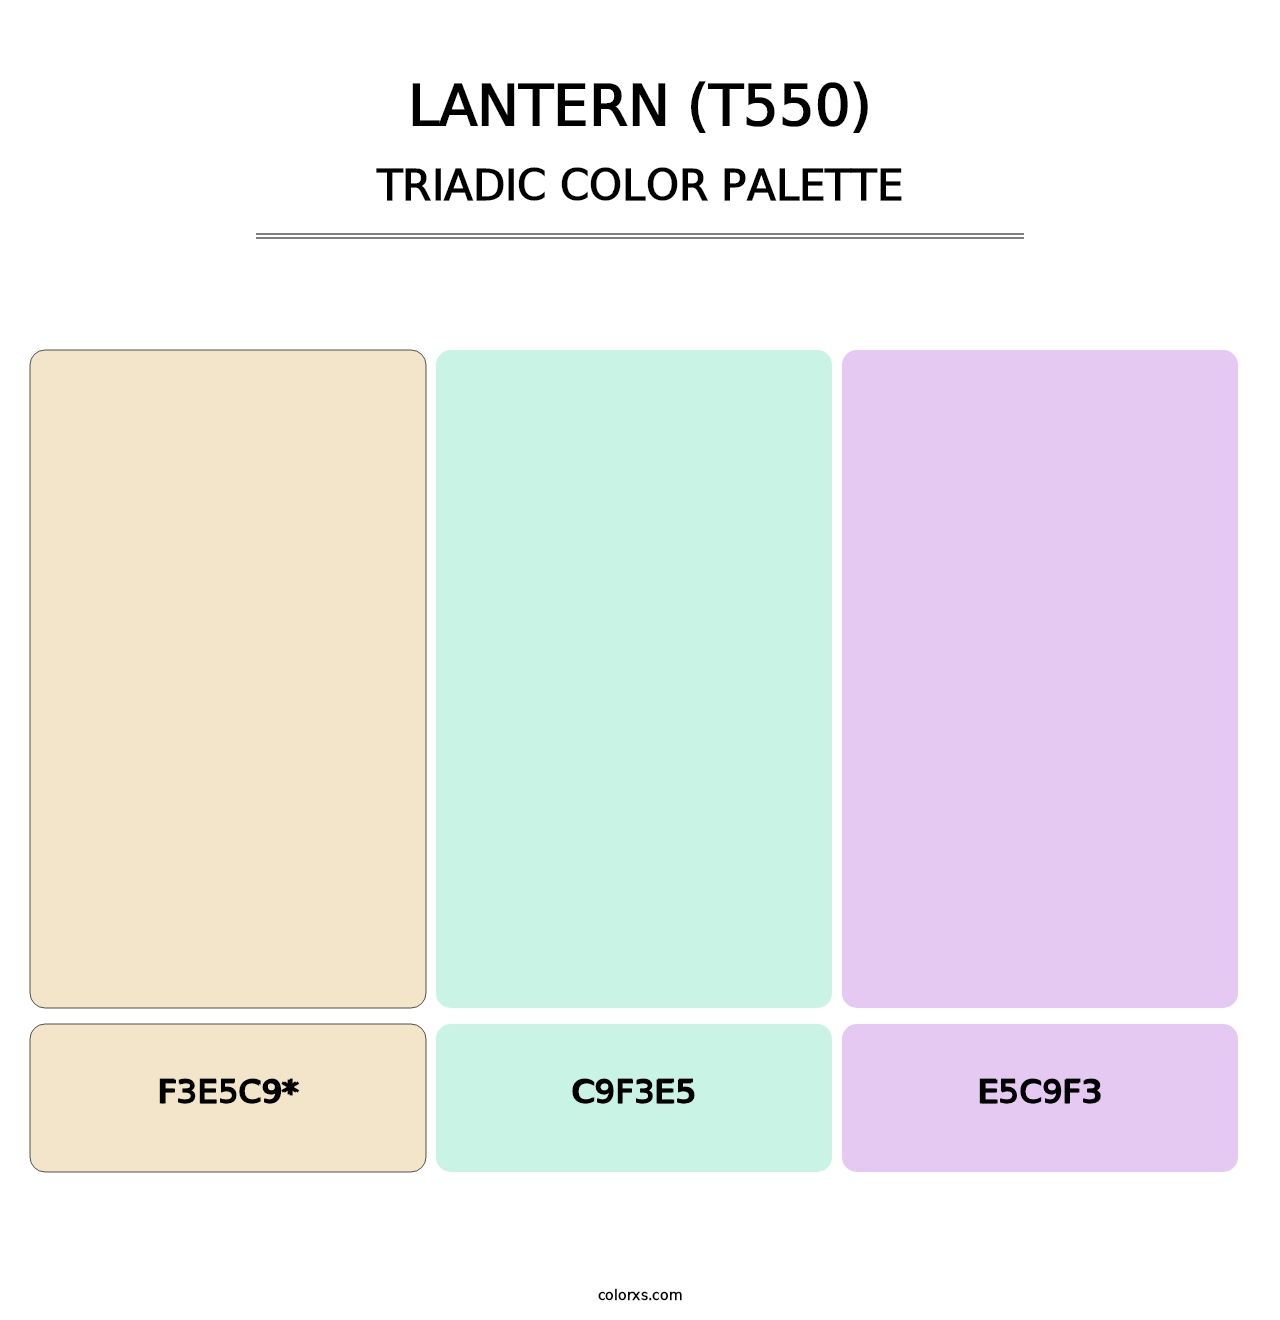 Lantern (T550) - Triadic Color Palette